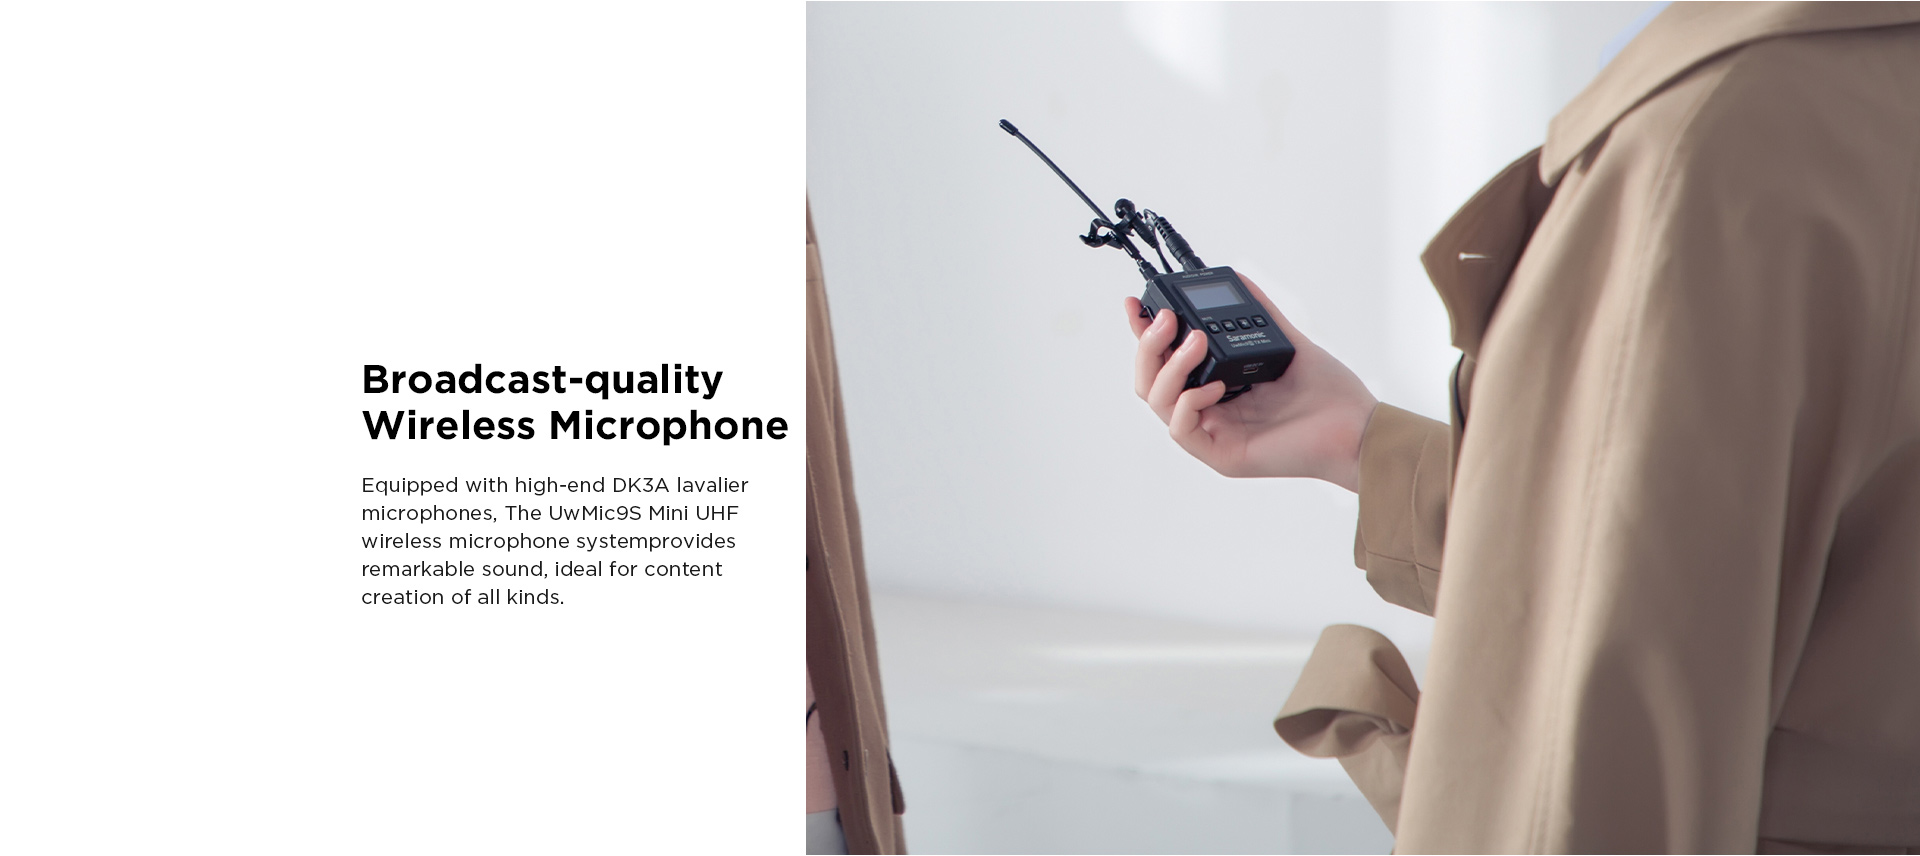 Saramonic UwMic9S mini Wireless microphone Systems